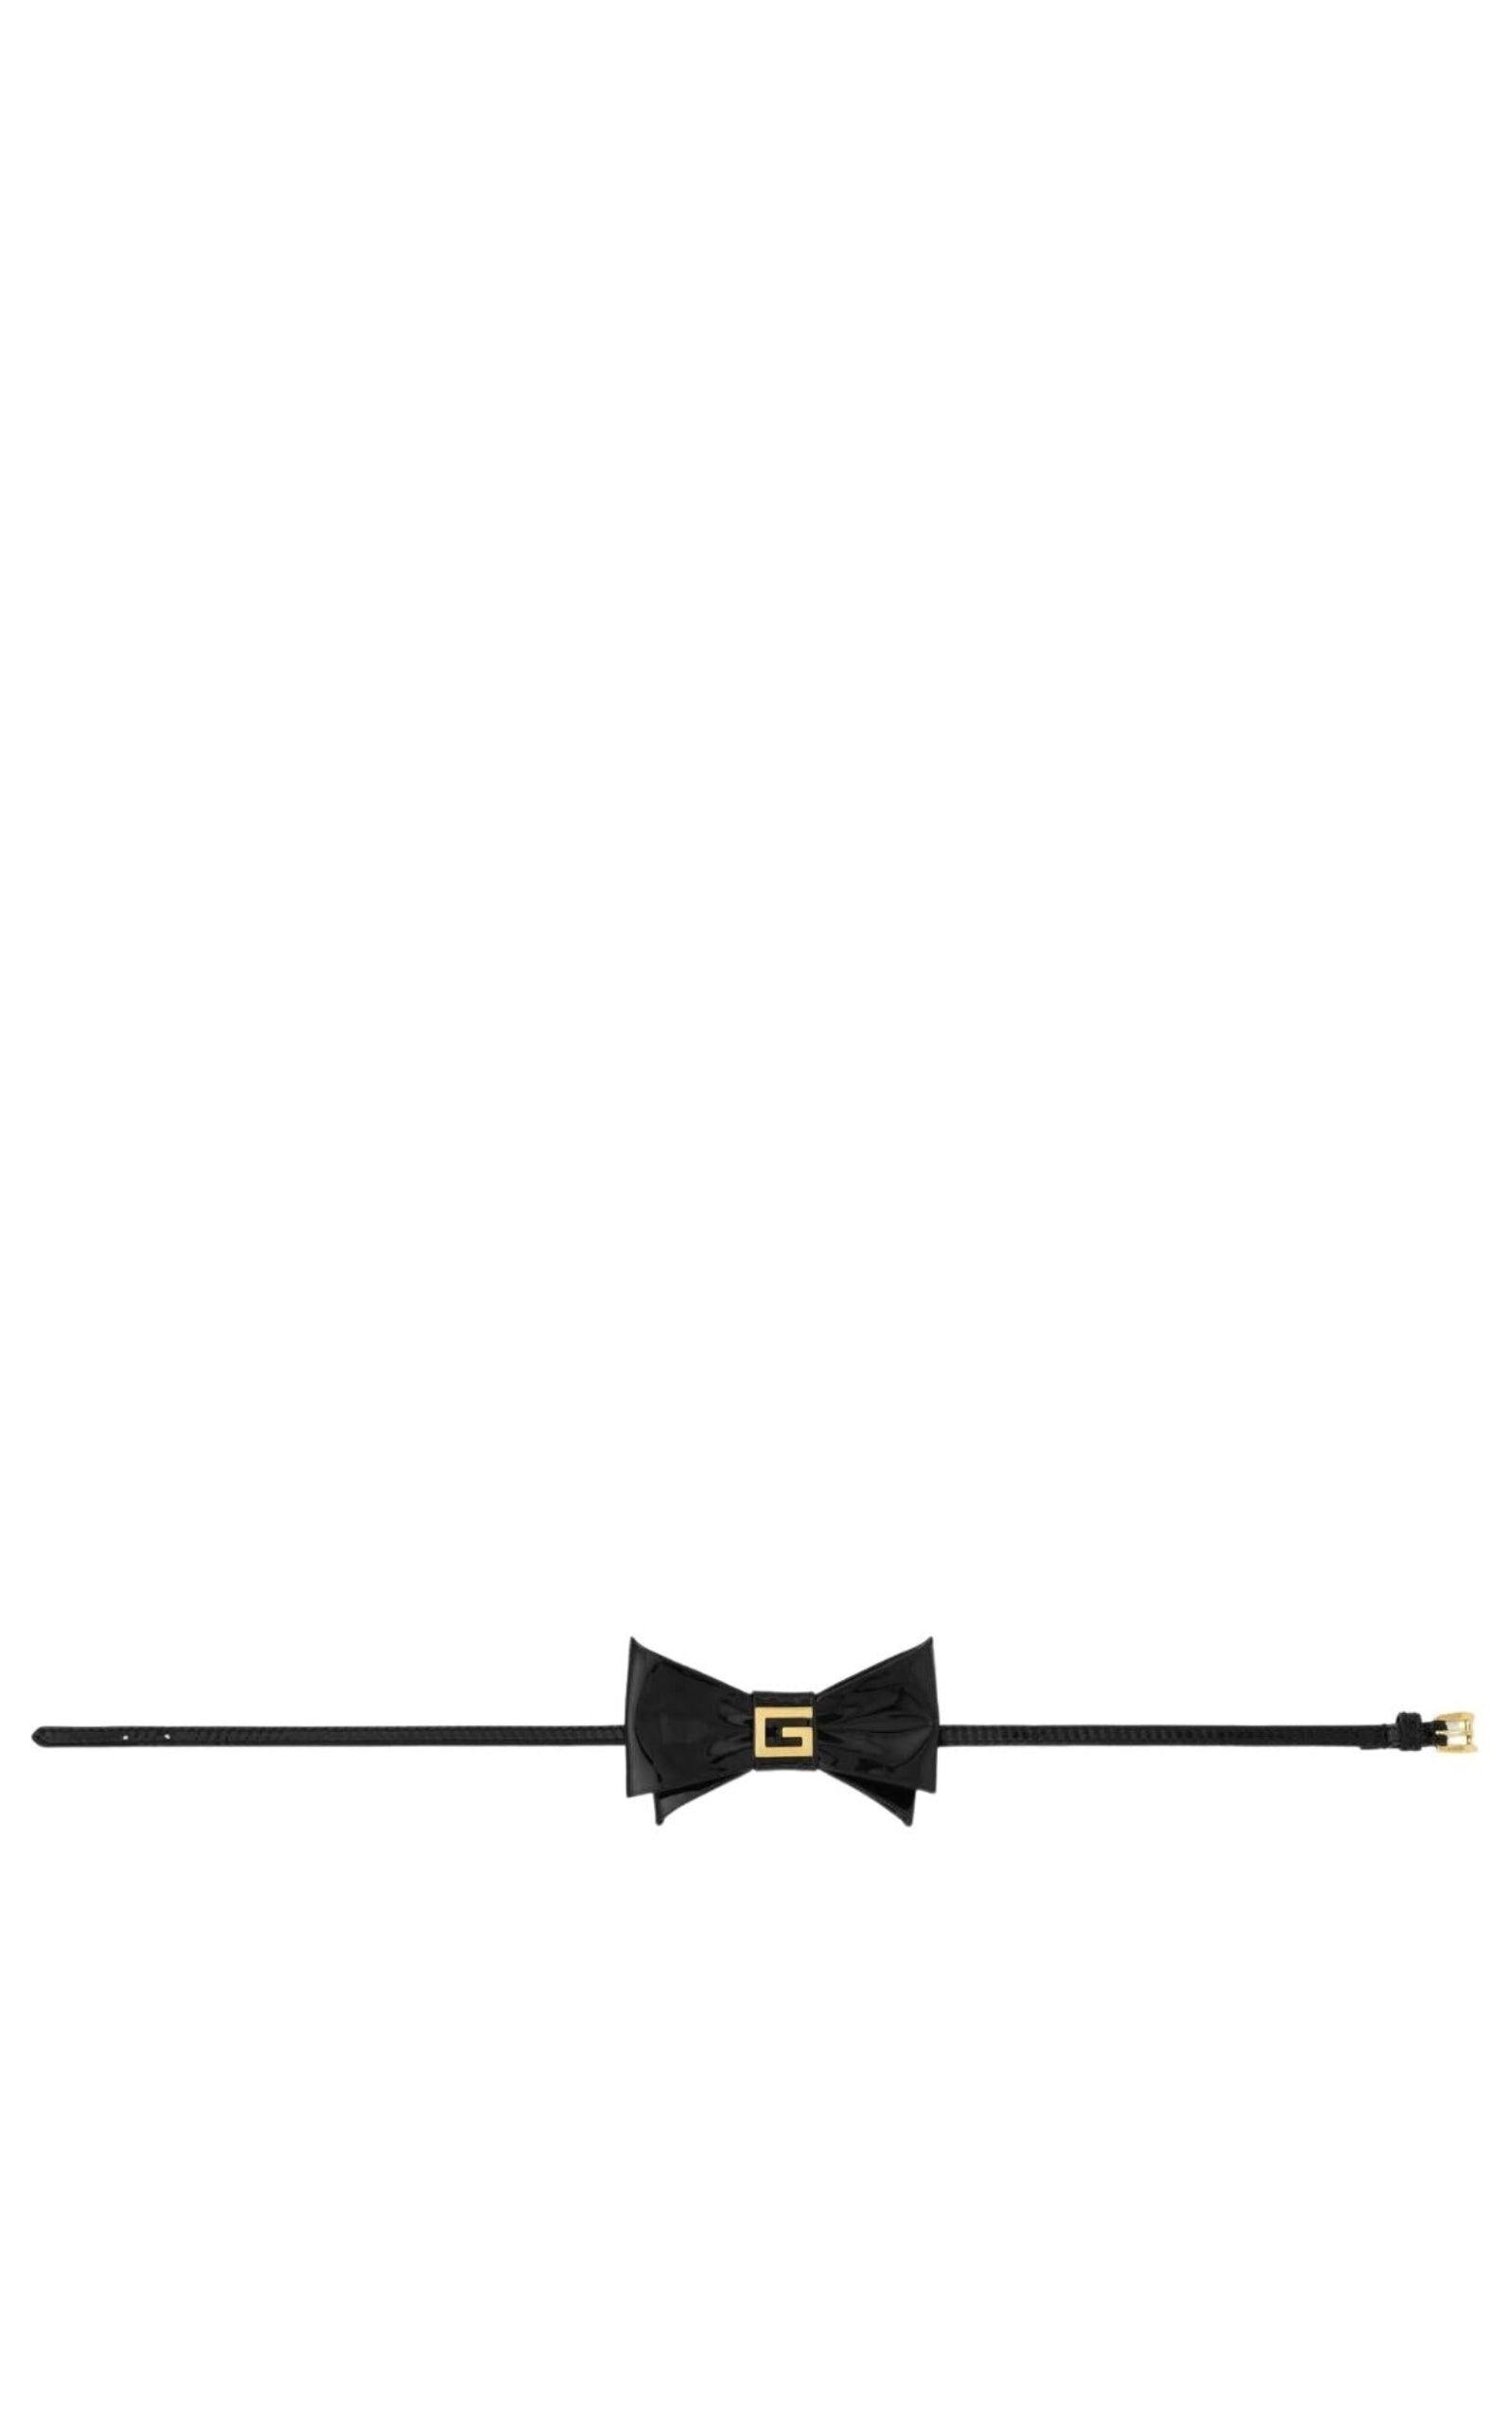  GucciLogo Bow Tie Choker - Runway Catalog